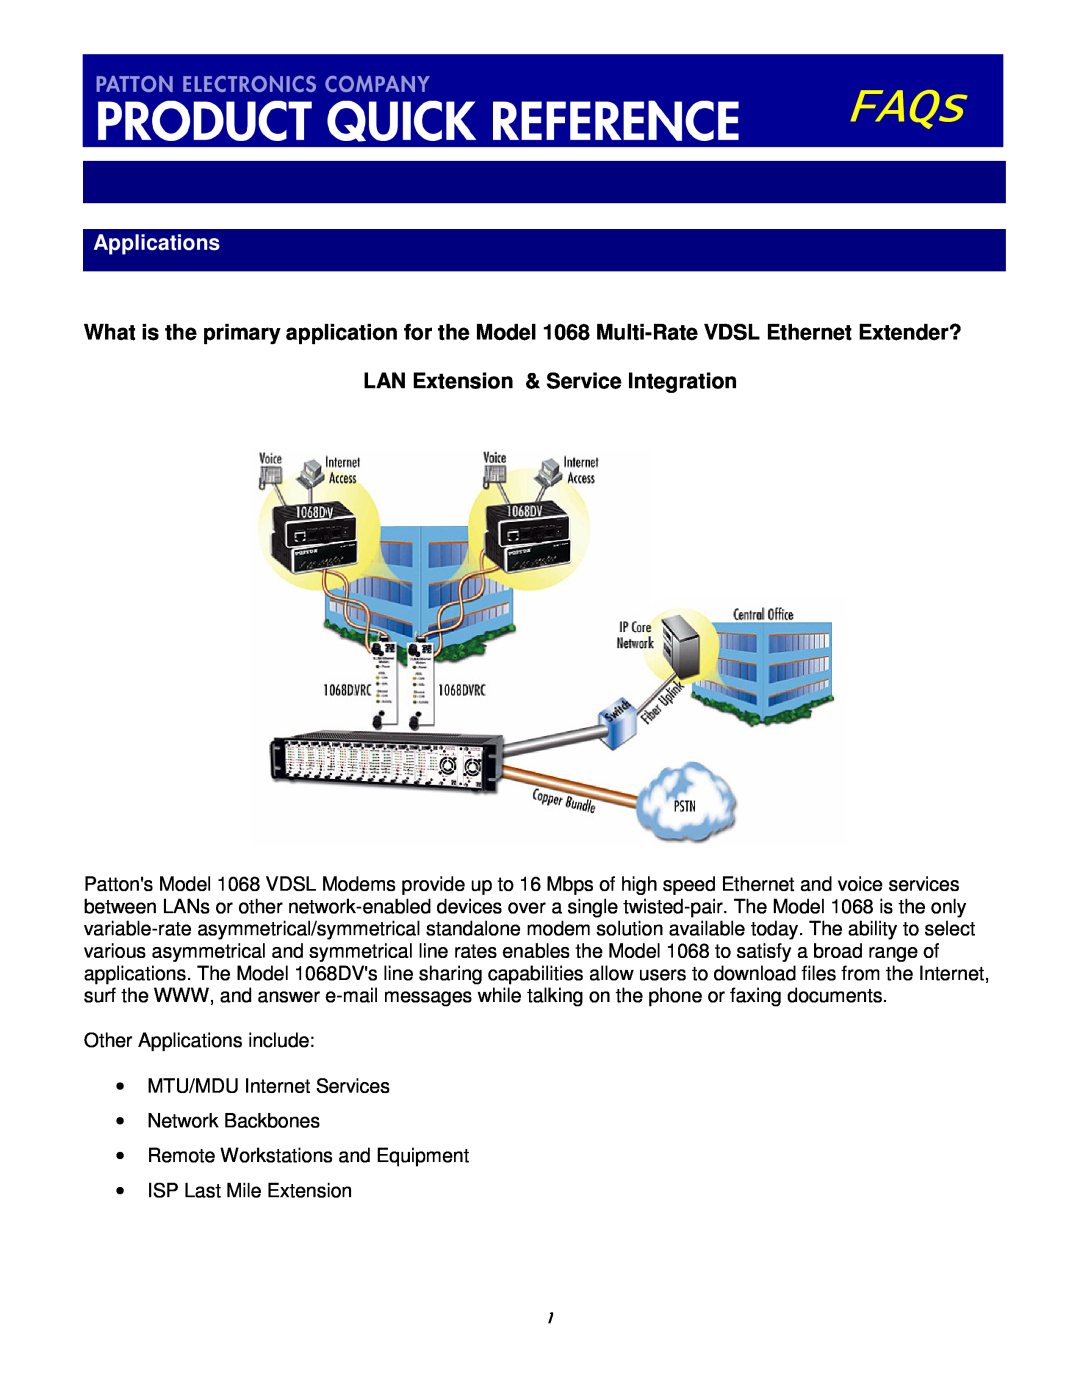 Patton electronic 1068 VDSL manual FAQs, Applications 